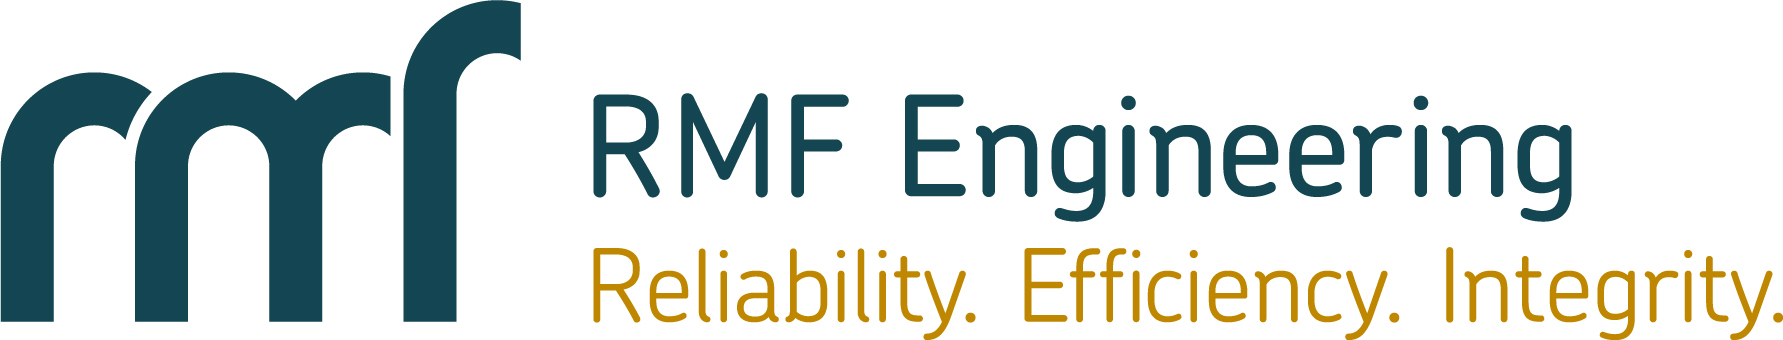 RMF Engineering Logo - Reliability. Efficiency. Integrity.